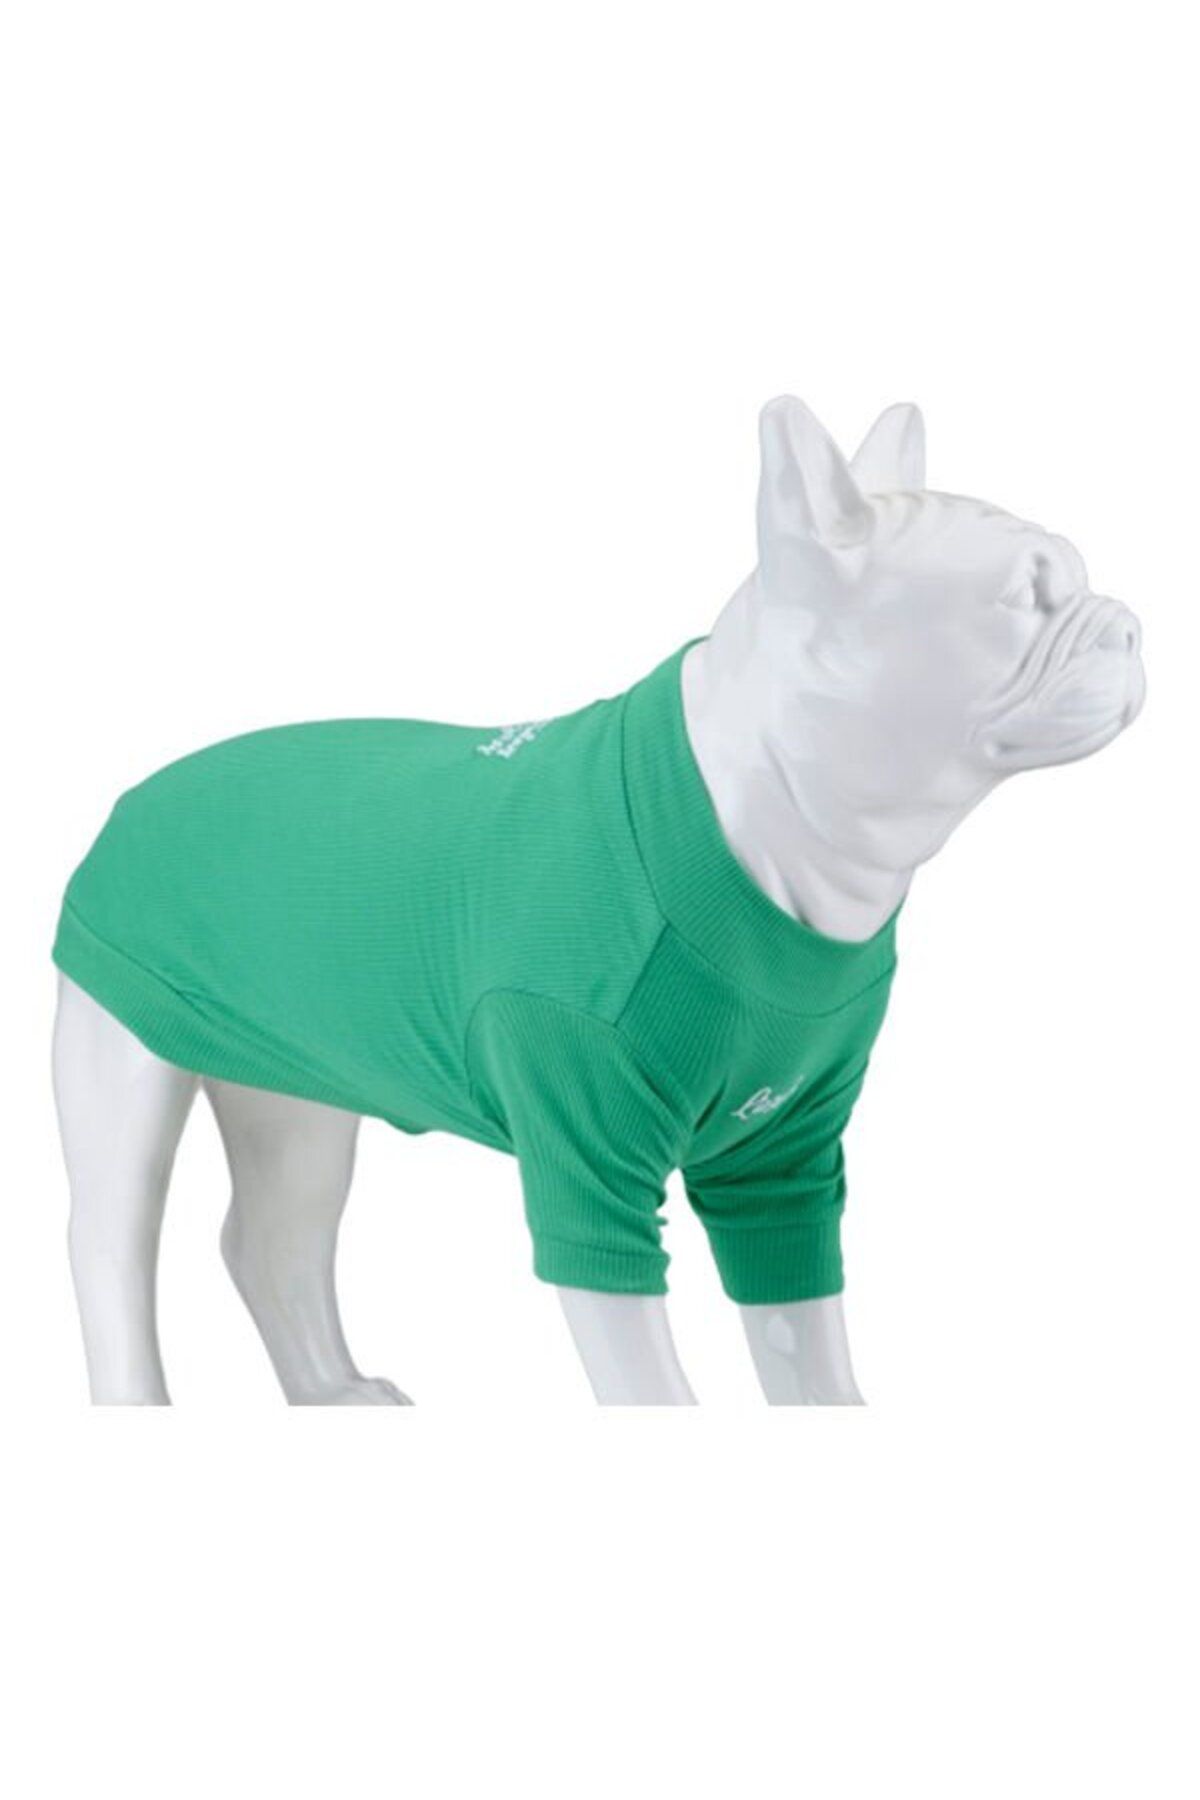 Lindodogs Lindo Dogs Make Today Amazing Köpek Kıyafeti Tshirt Yeşil Beden 3